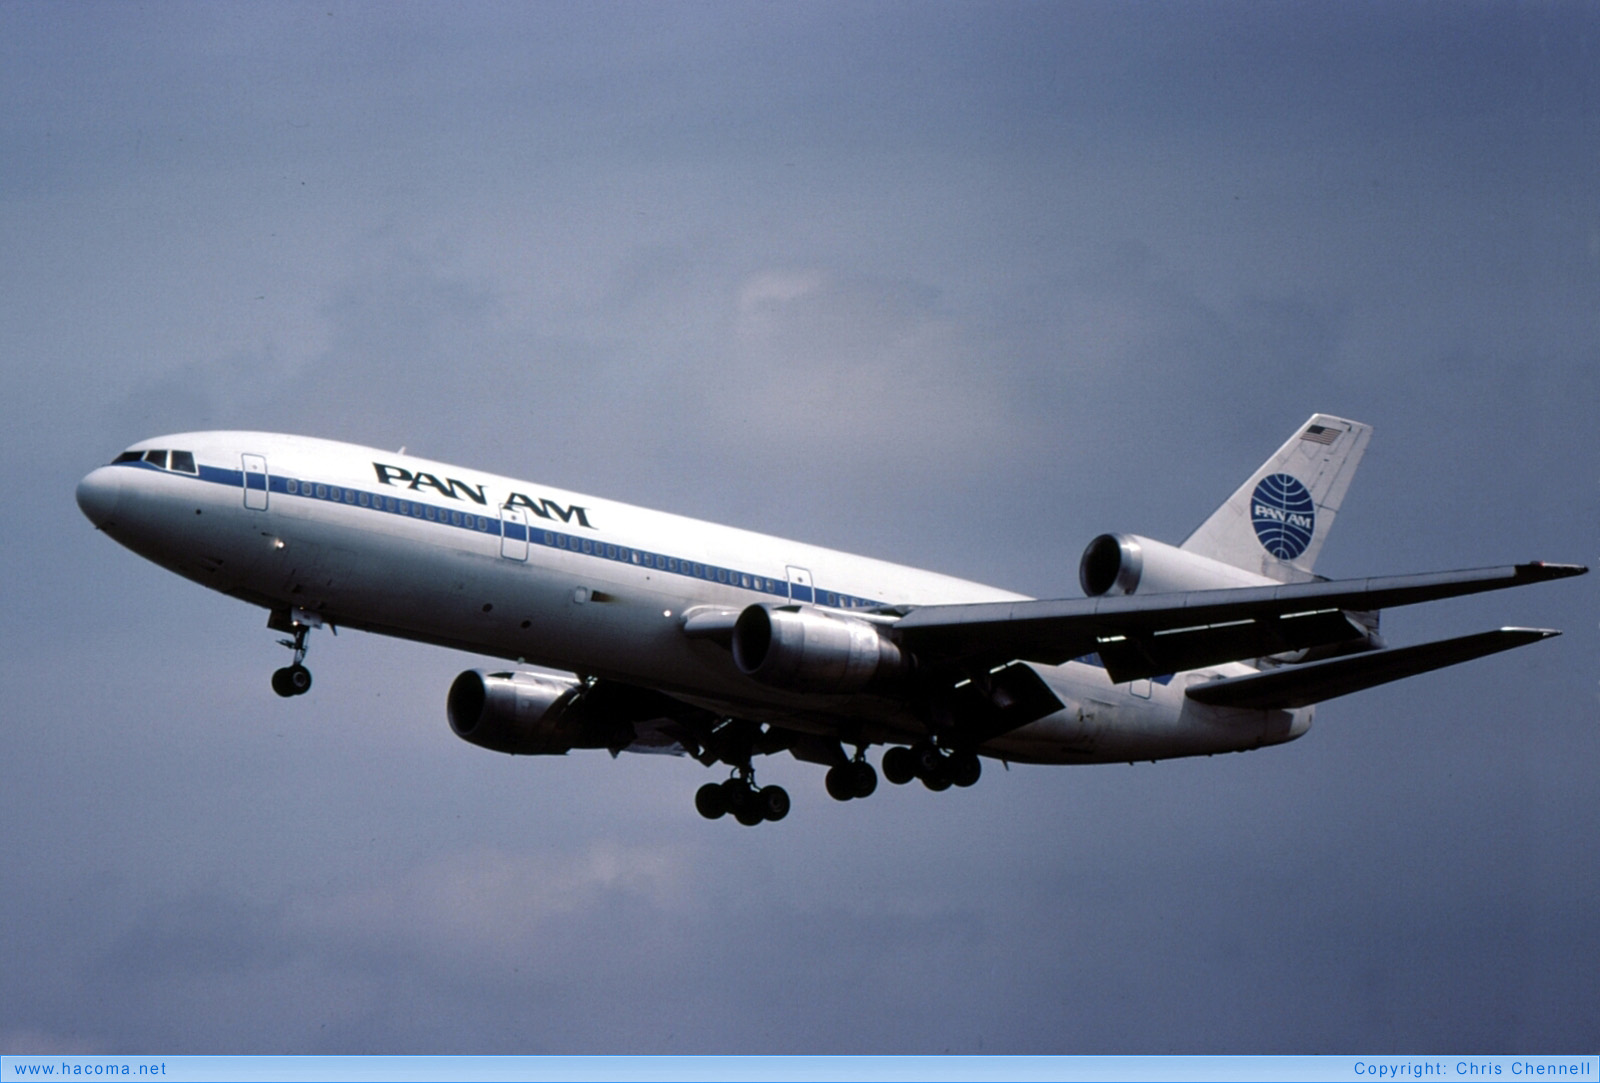 Photo of N80NA - Pan Am Clipper Star of the Union - London Heathrow Airport - Jun 13, 1981